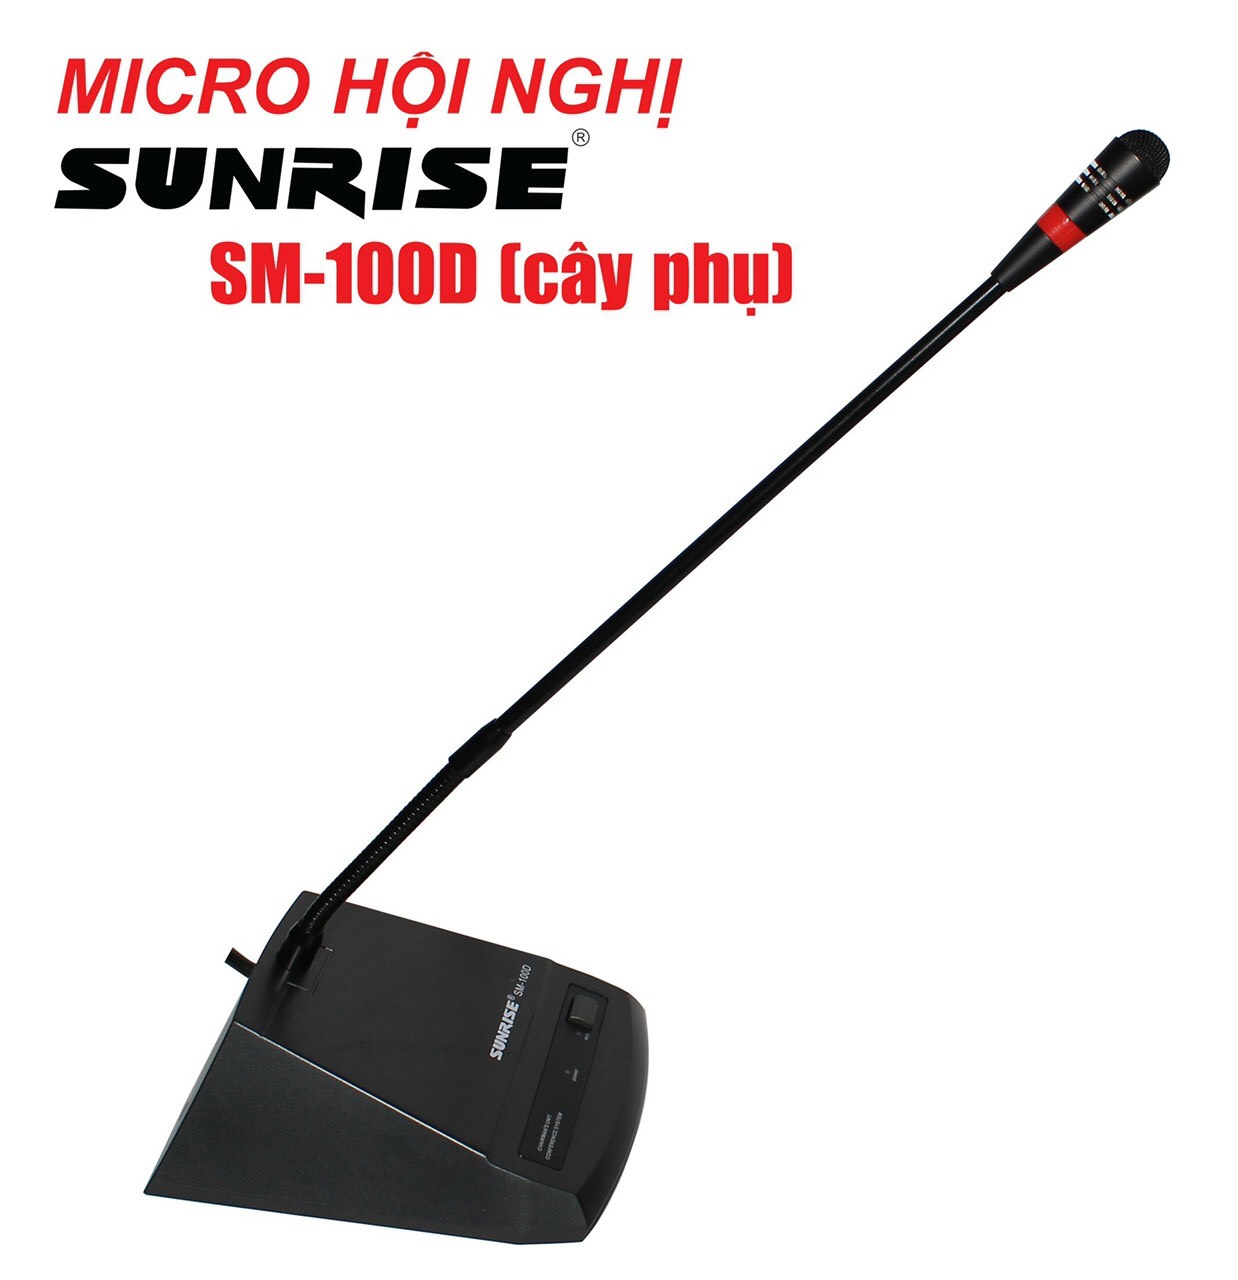 Micro hội nghị Sunrise SM-100D (Micro phụ)